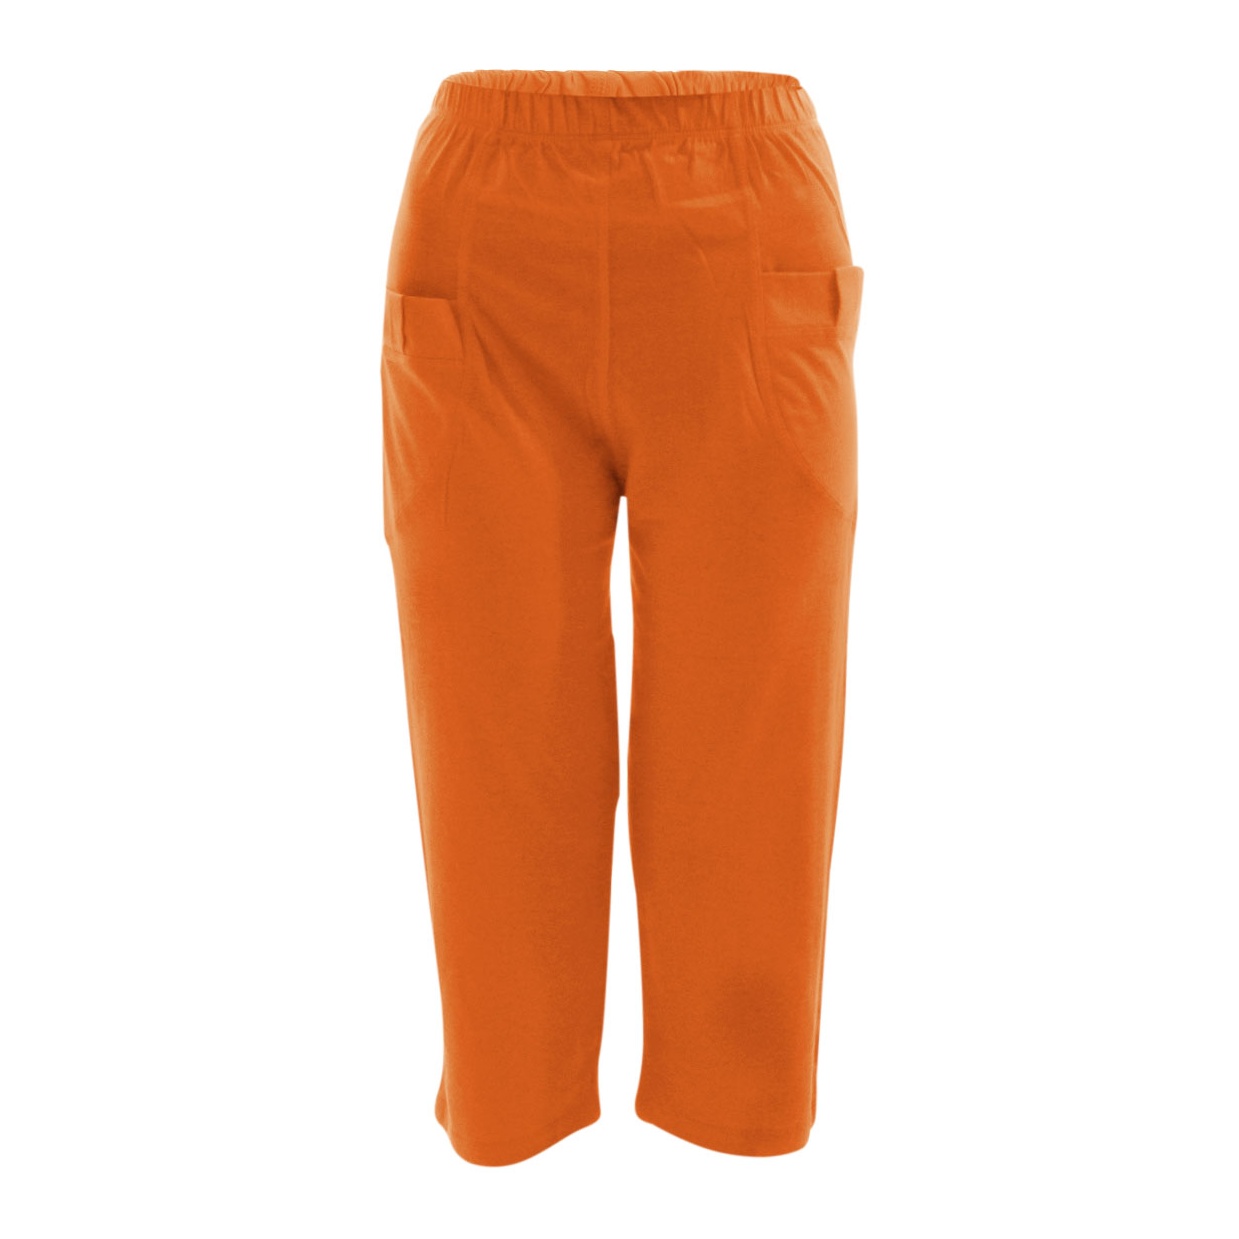 شلوارک زنانه کد 022 رنگ نارنجی Ebadi-001